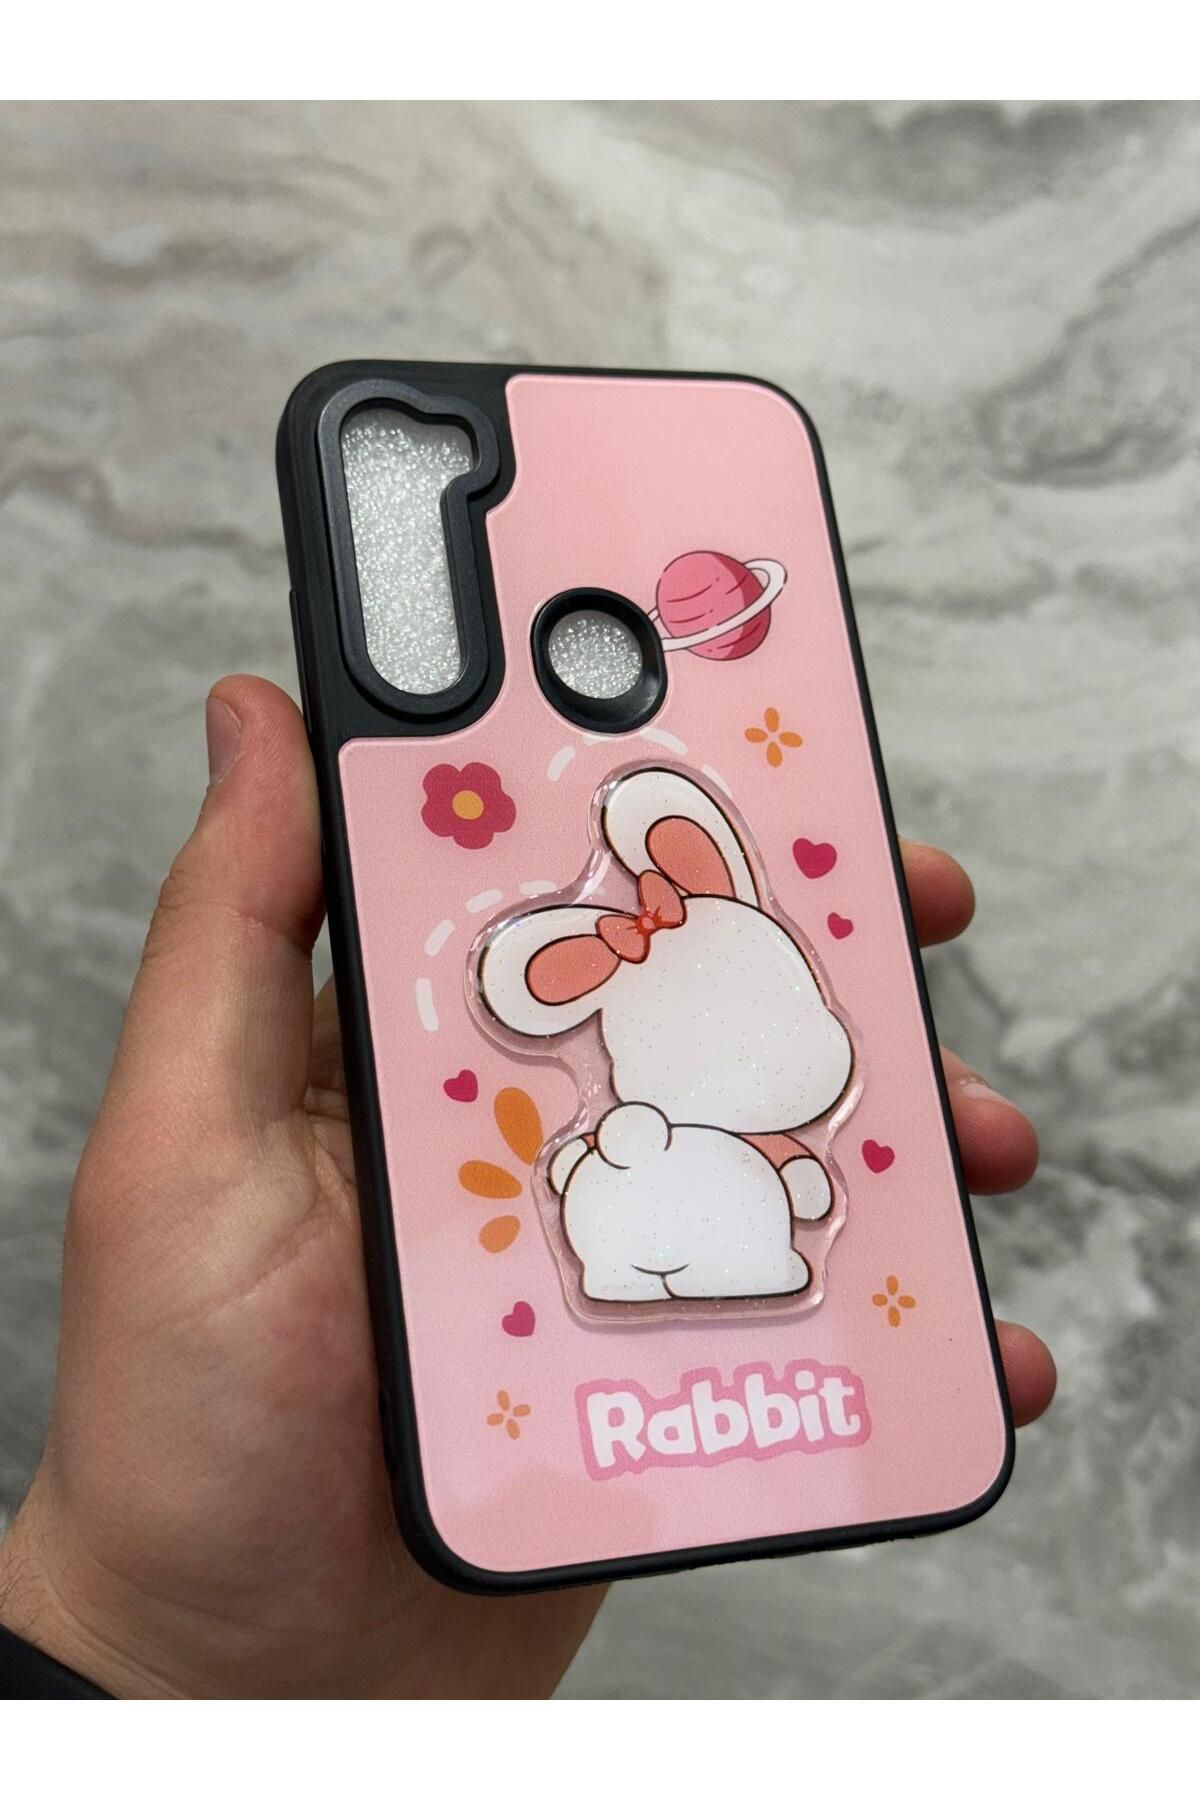 Sphone Xiaomi Redmi Note 8 Kılıf Parlak Neon Renk Kabartma Emoji Teddy Bear Baby Rabbit Cat Sticker Grafiti